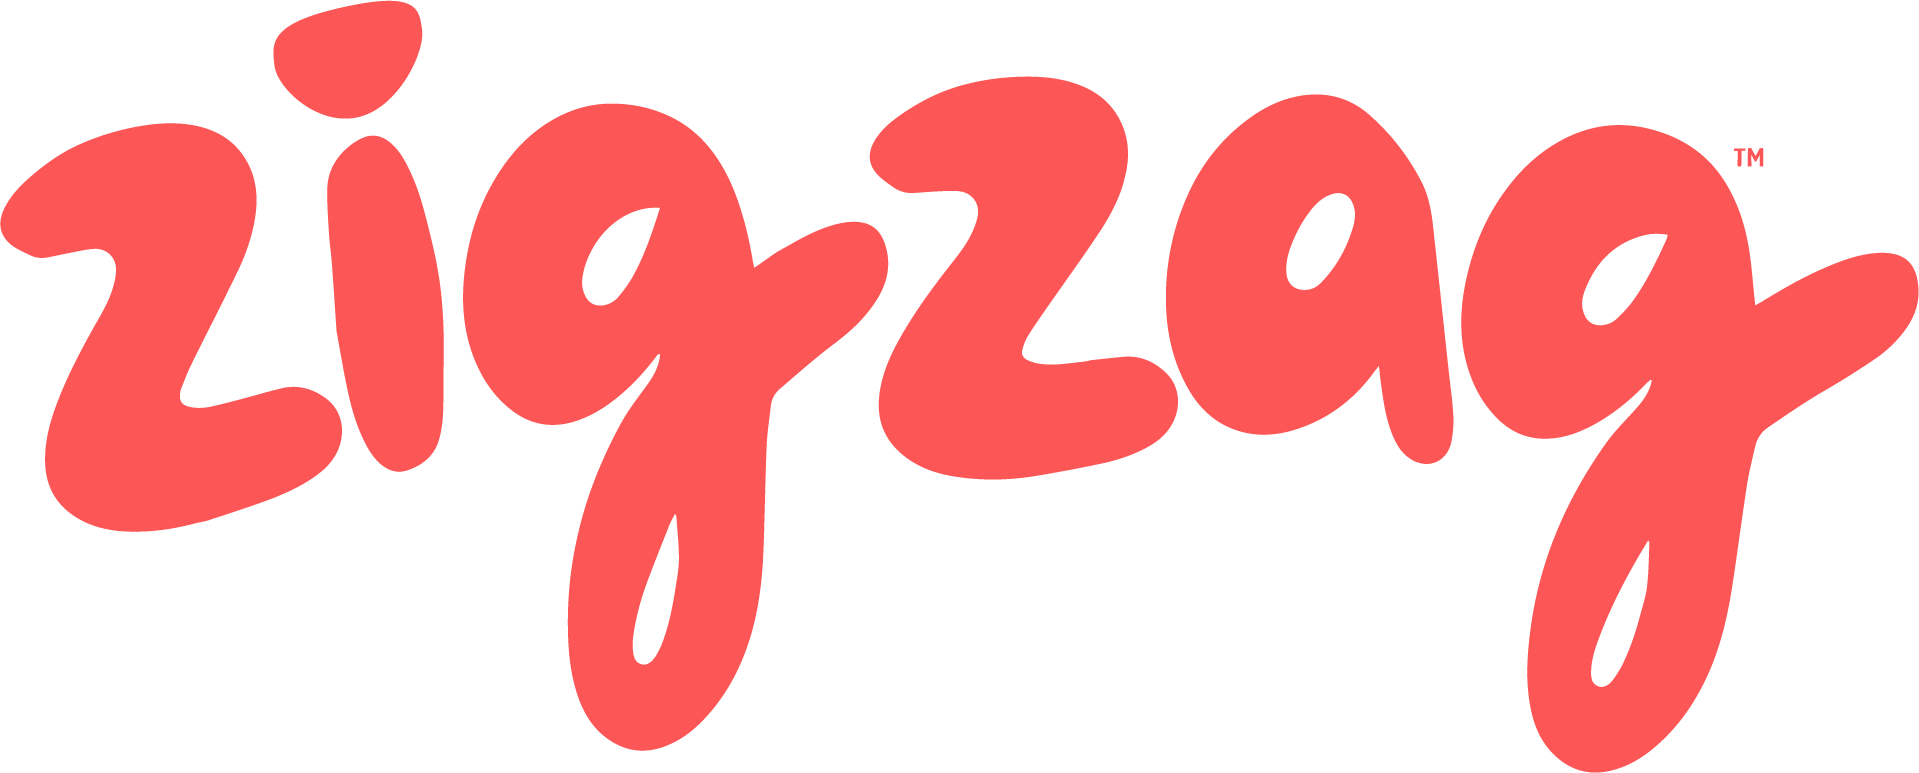 The Zigzag logo